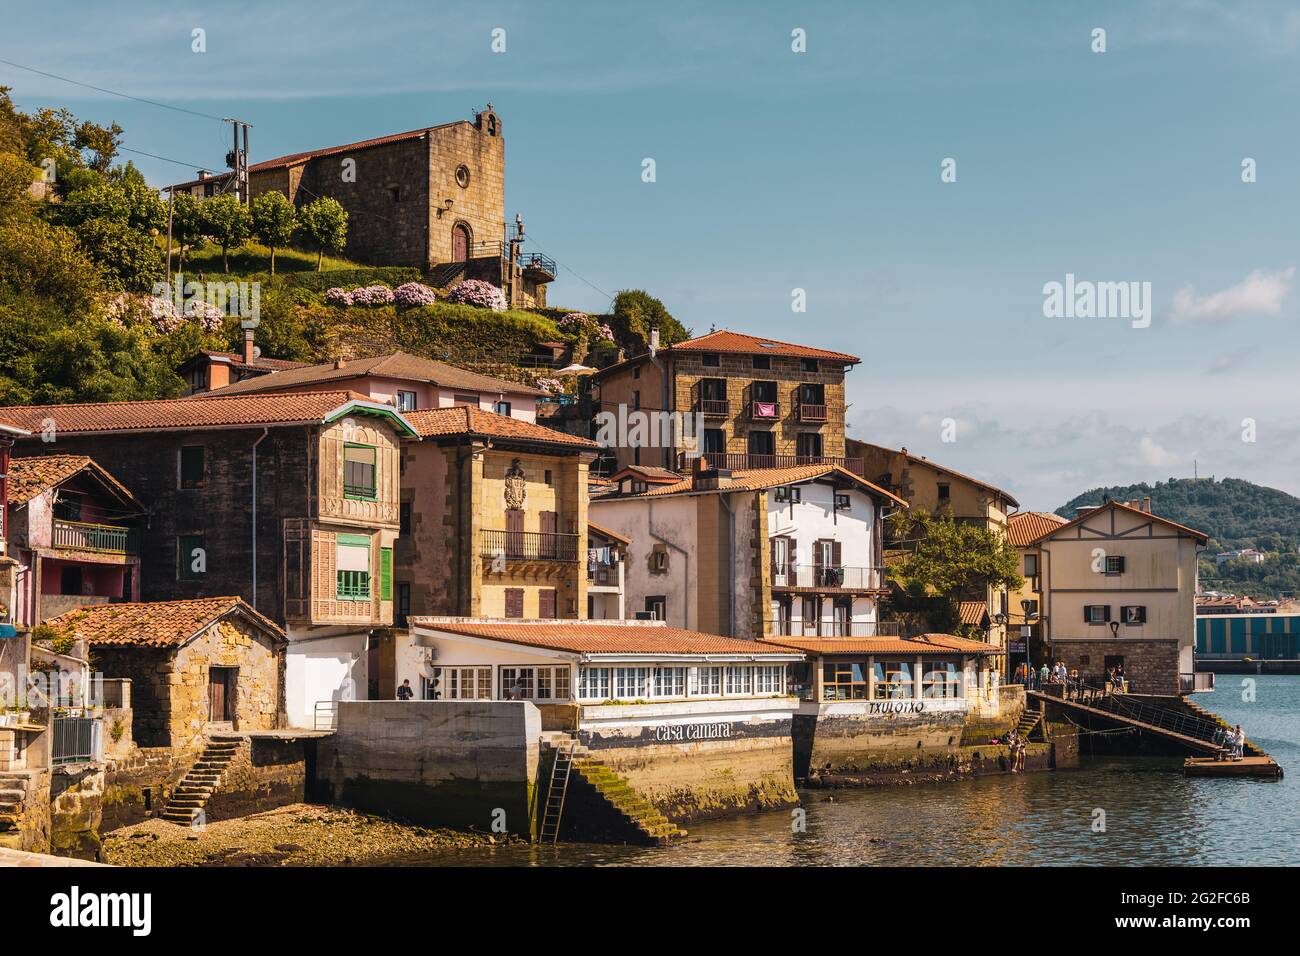 Pasaia Donibane - Fishing village - Donostia San Sebastian, Province of Gipuzkoa, Basque Country, Spain, Europe Stock Photo